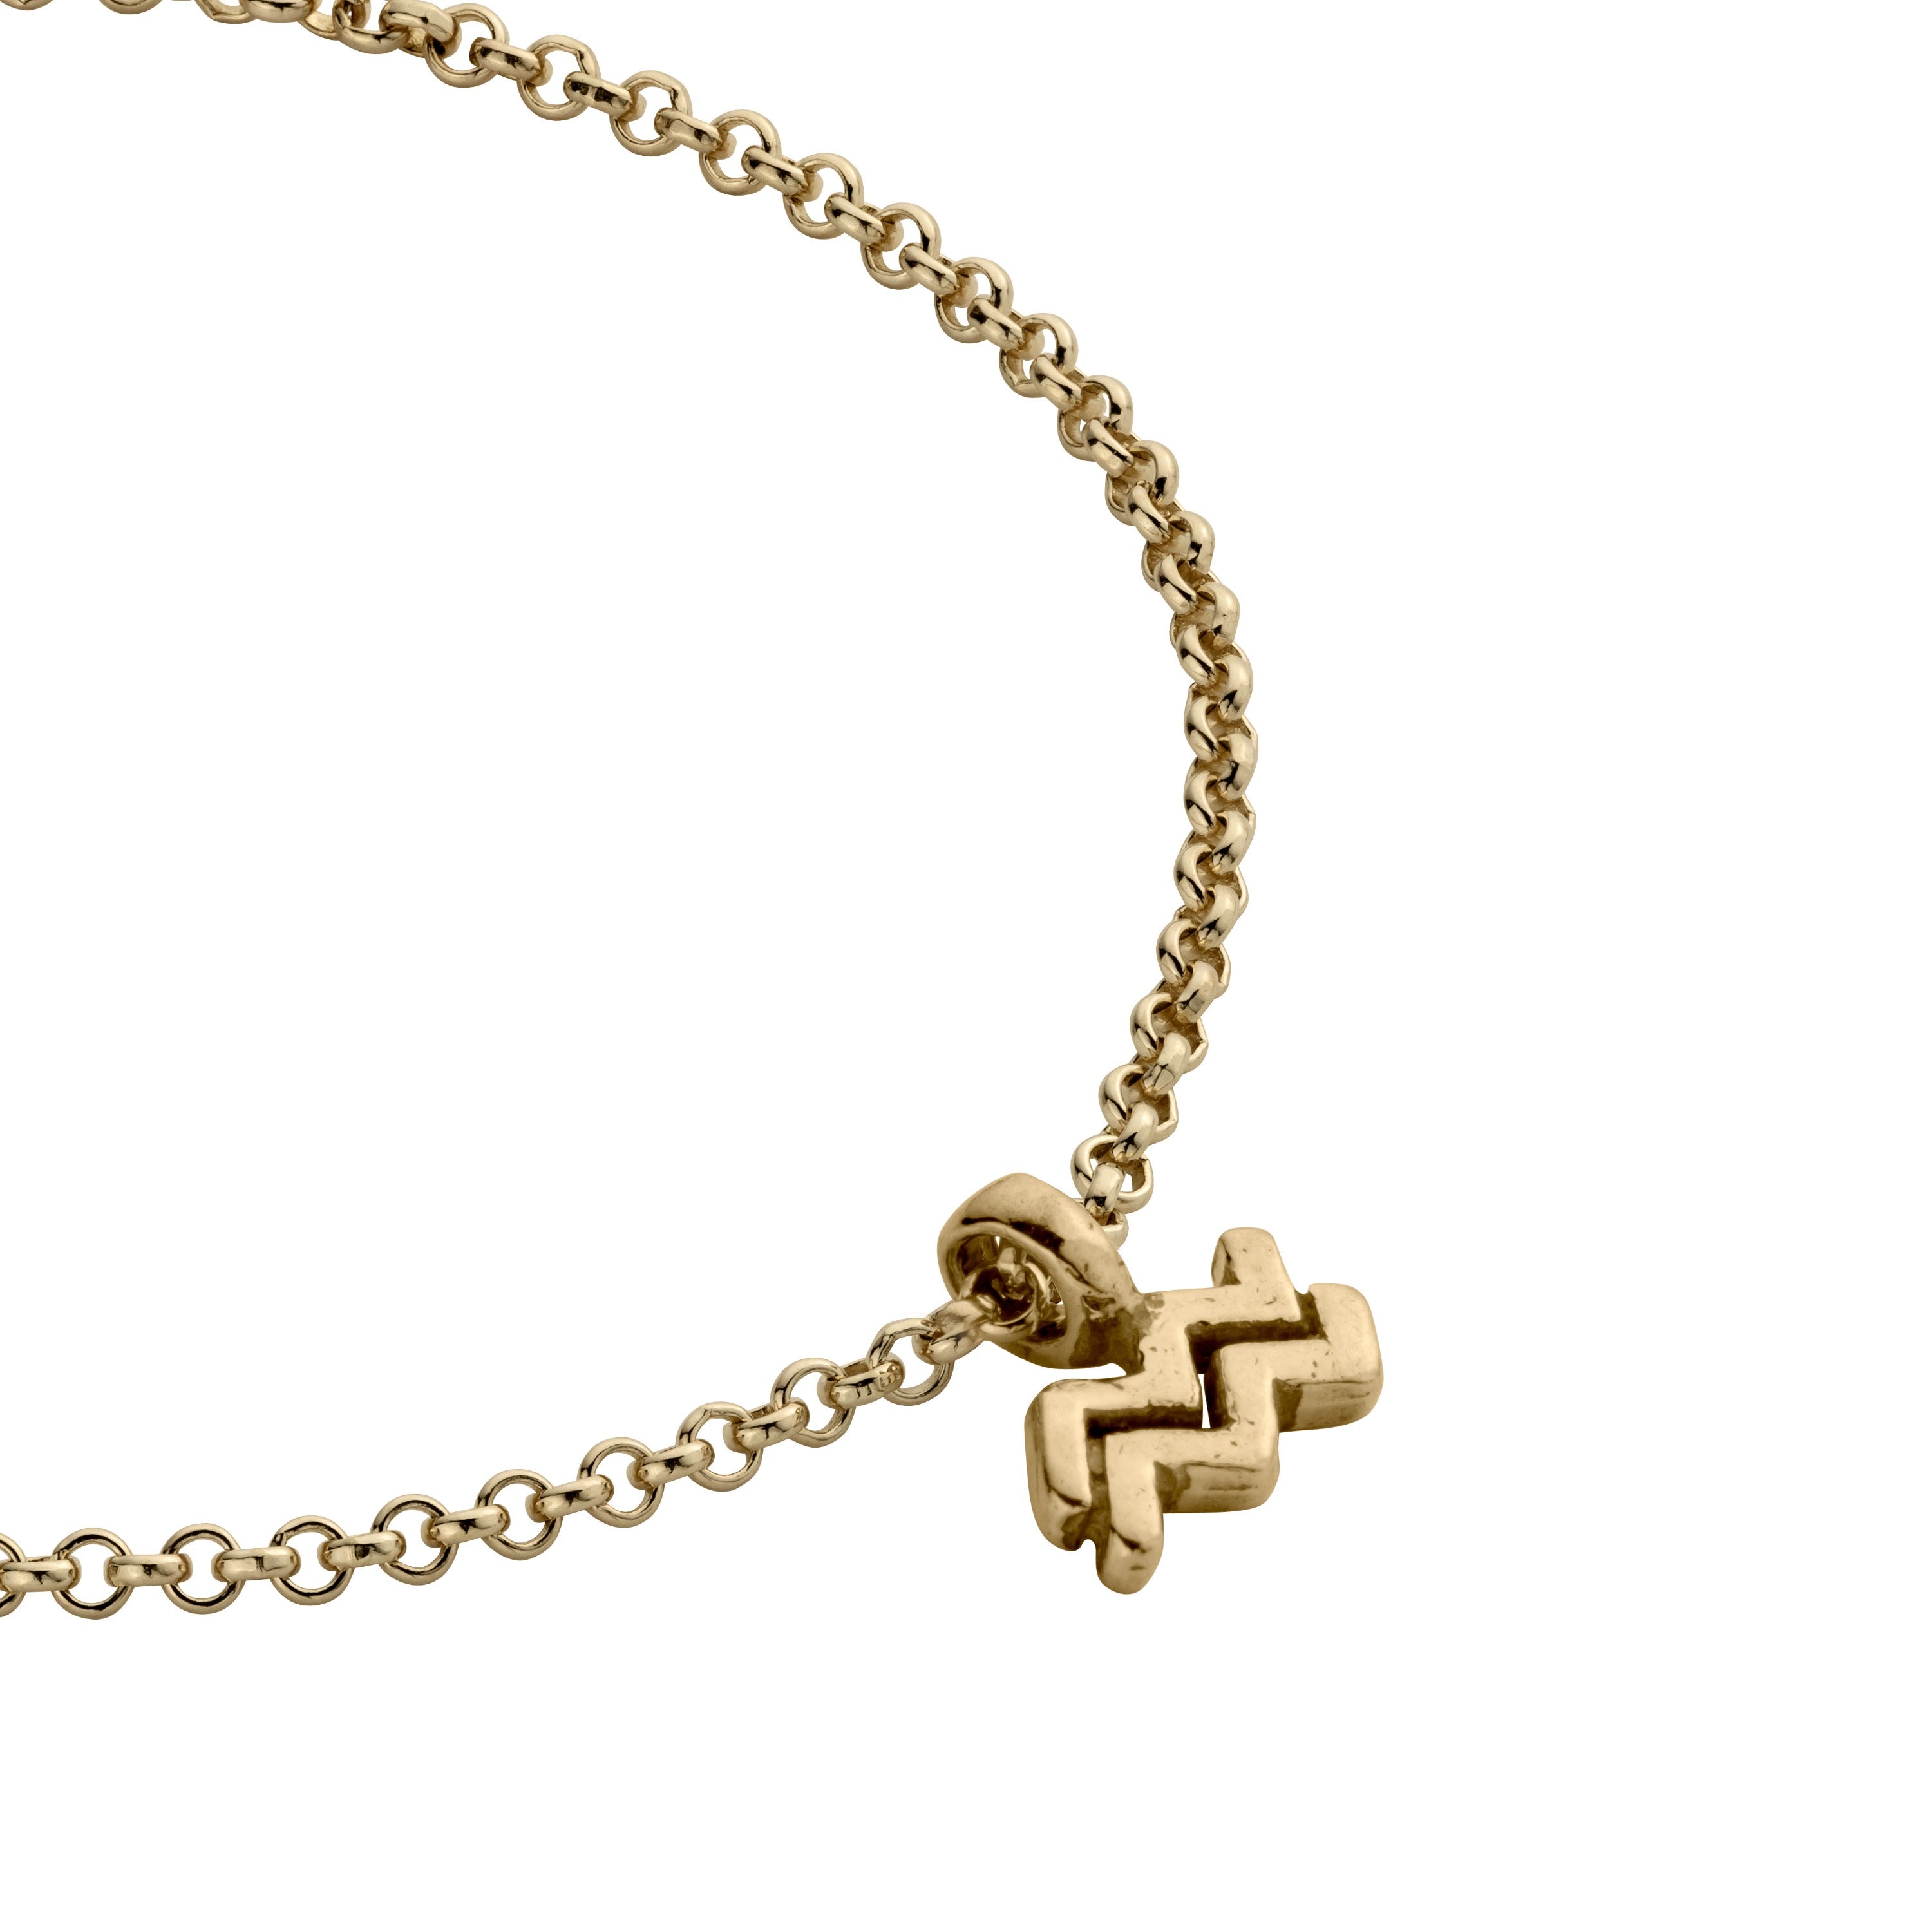 Gold Mini Aquarius Horoscope Chain Bracelet